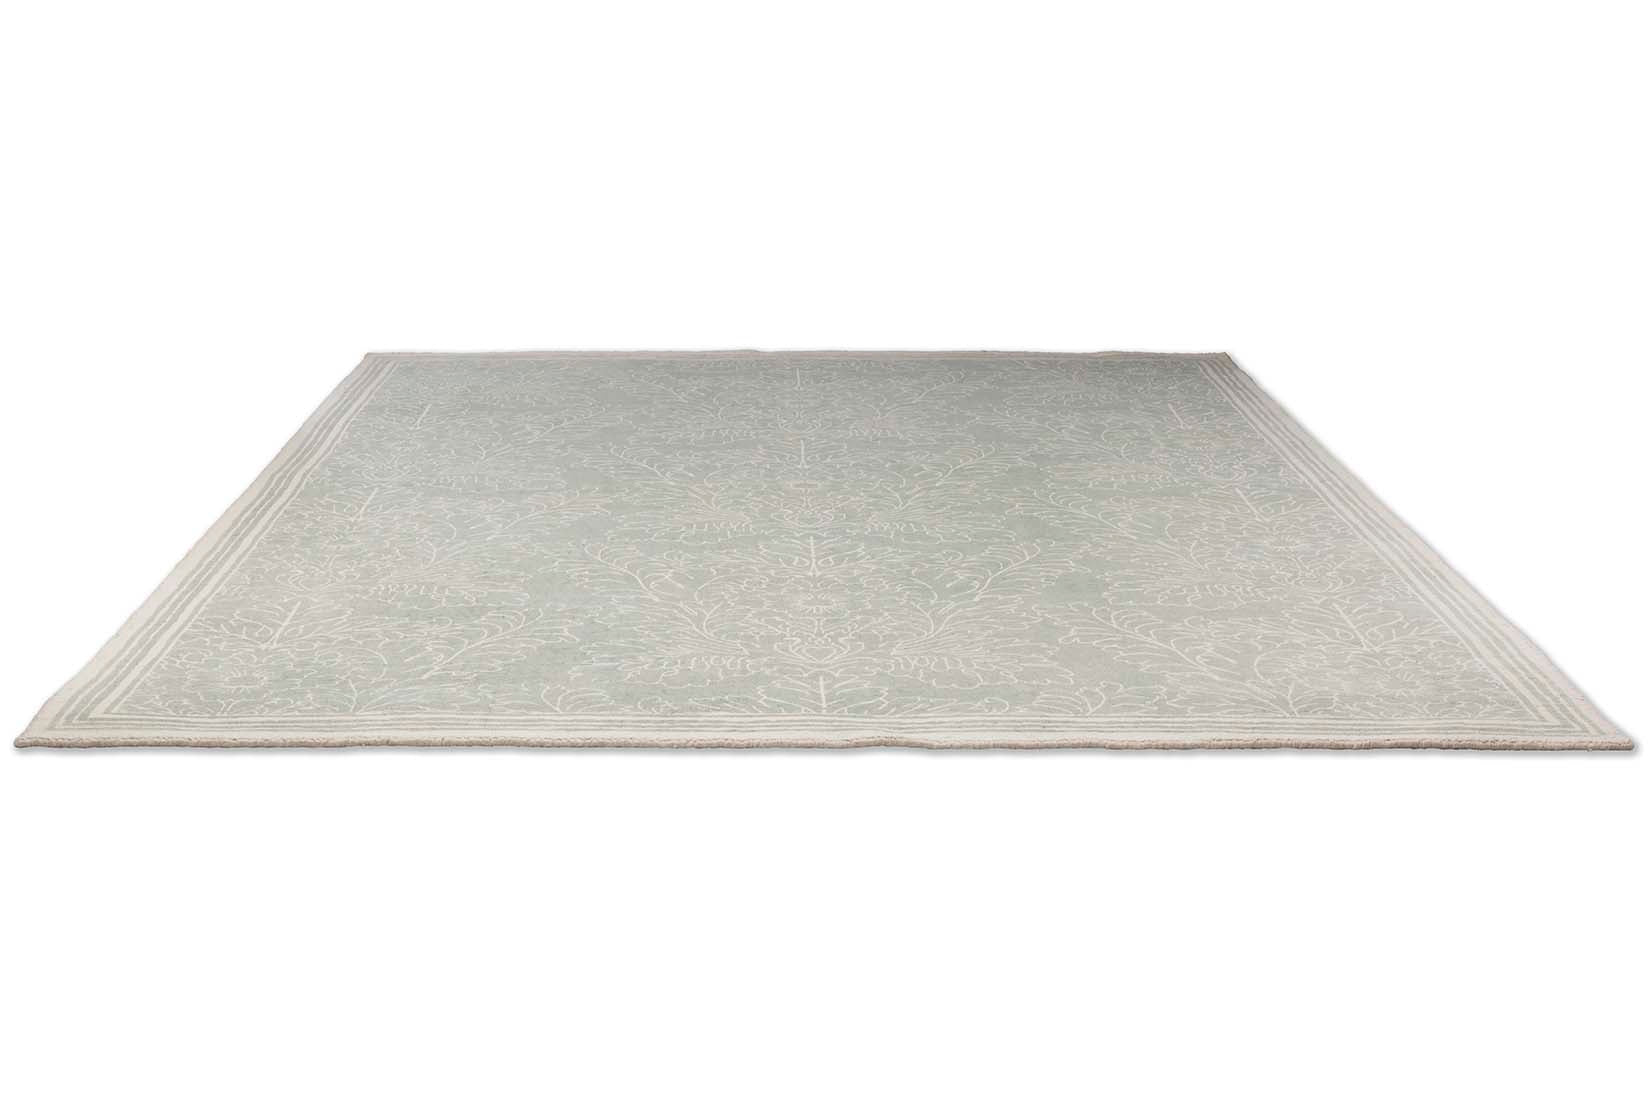 Green cotton rug in damask pattern
